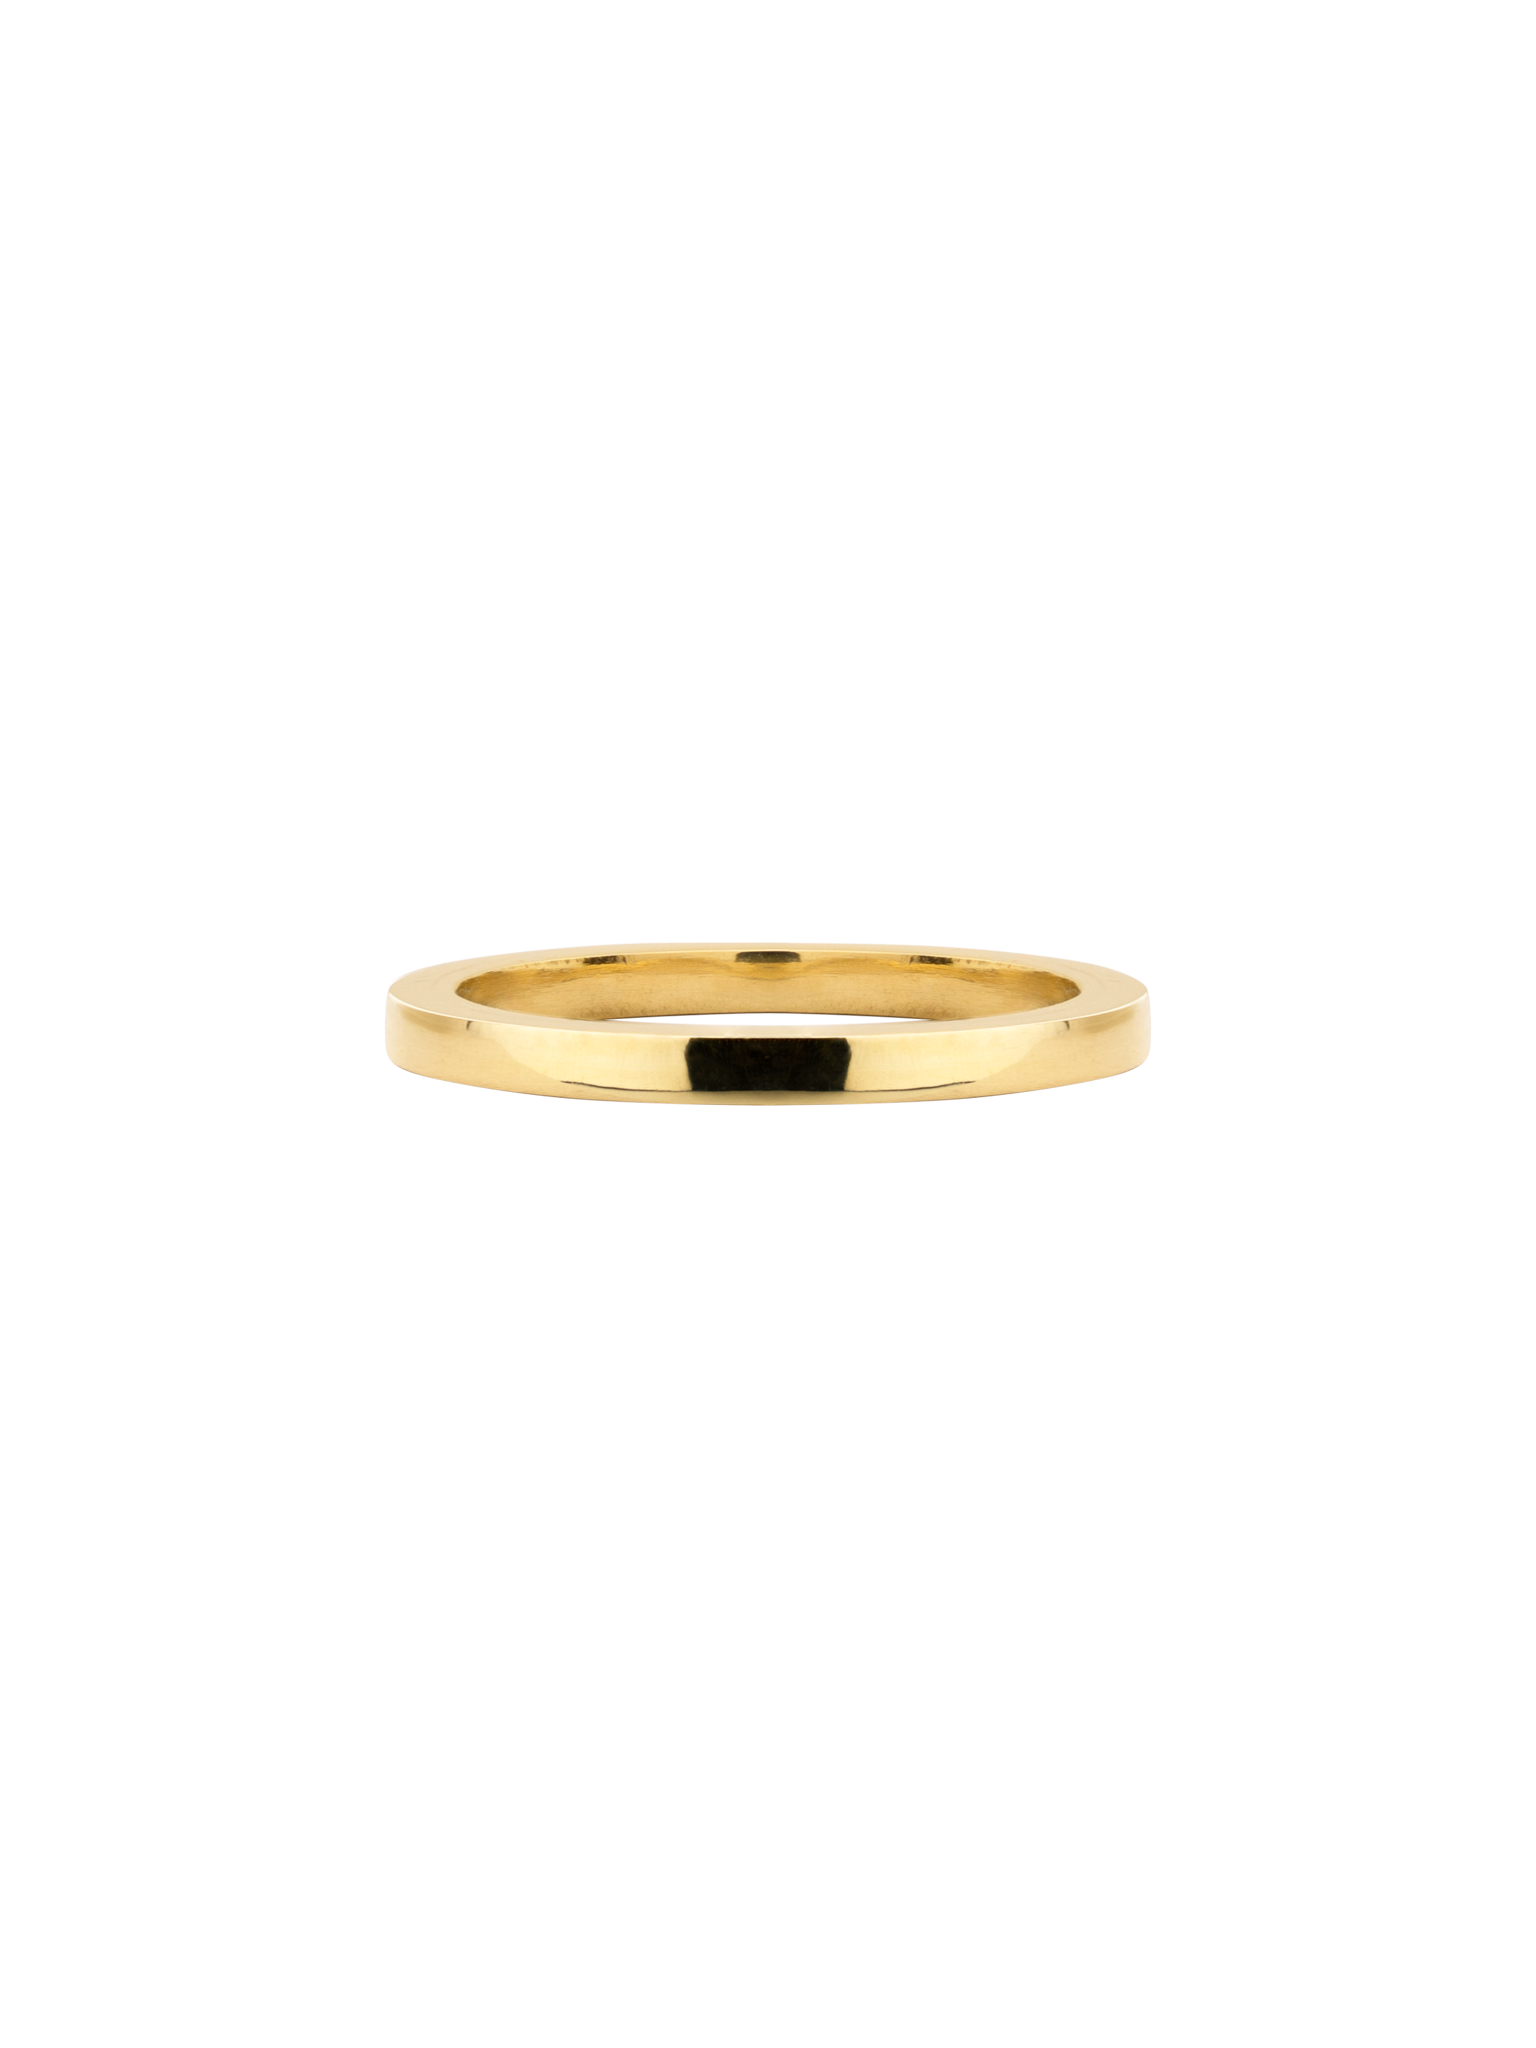 Charlotte gold ring polished